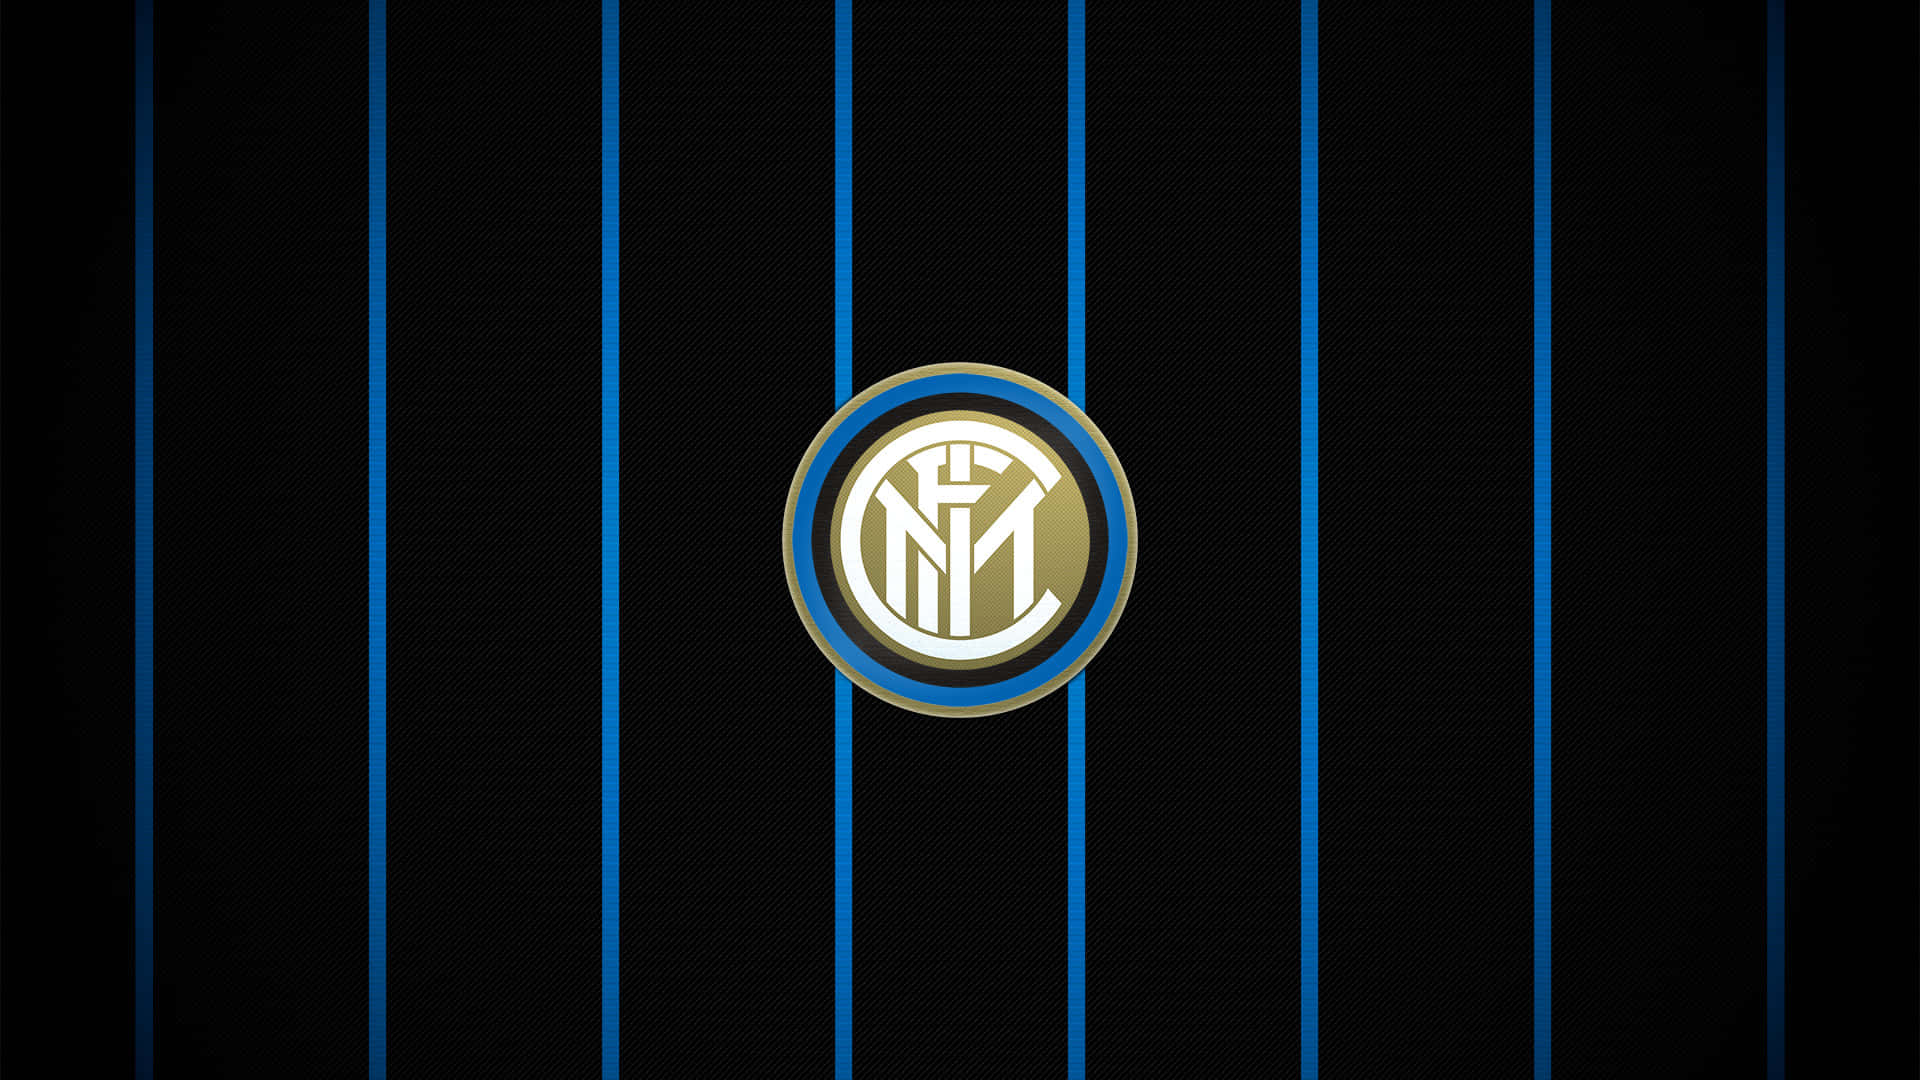 Intermediate Inter Milan Sports Logo Art Wallpaper